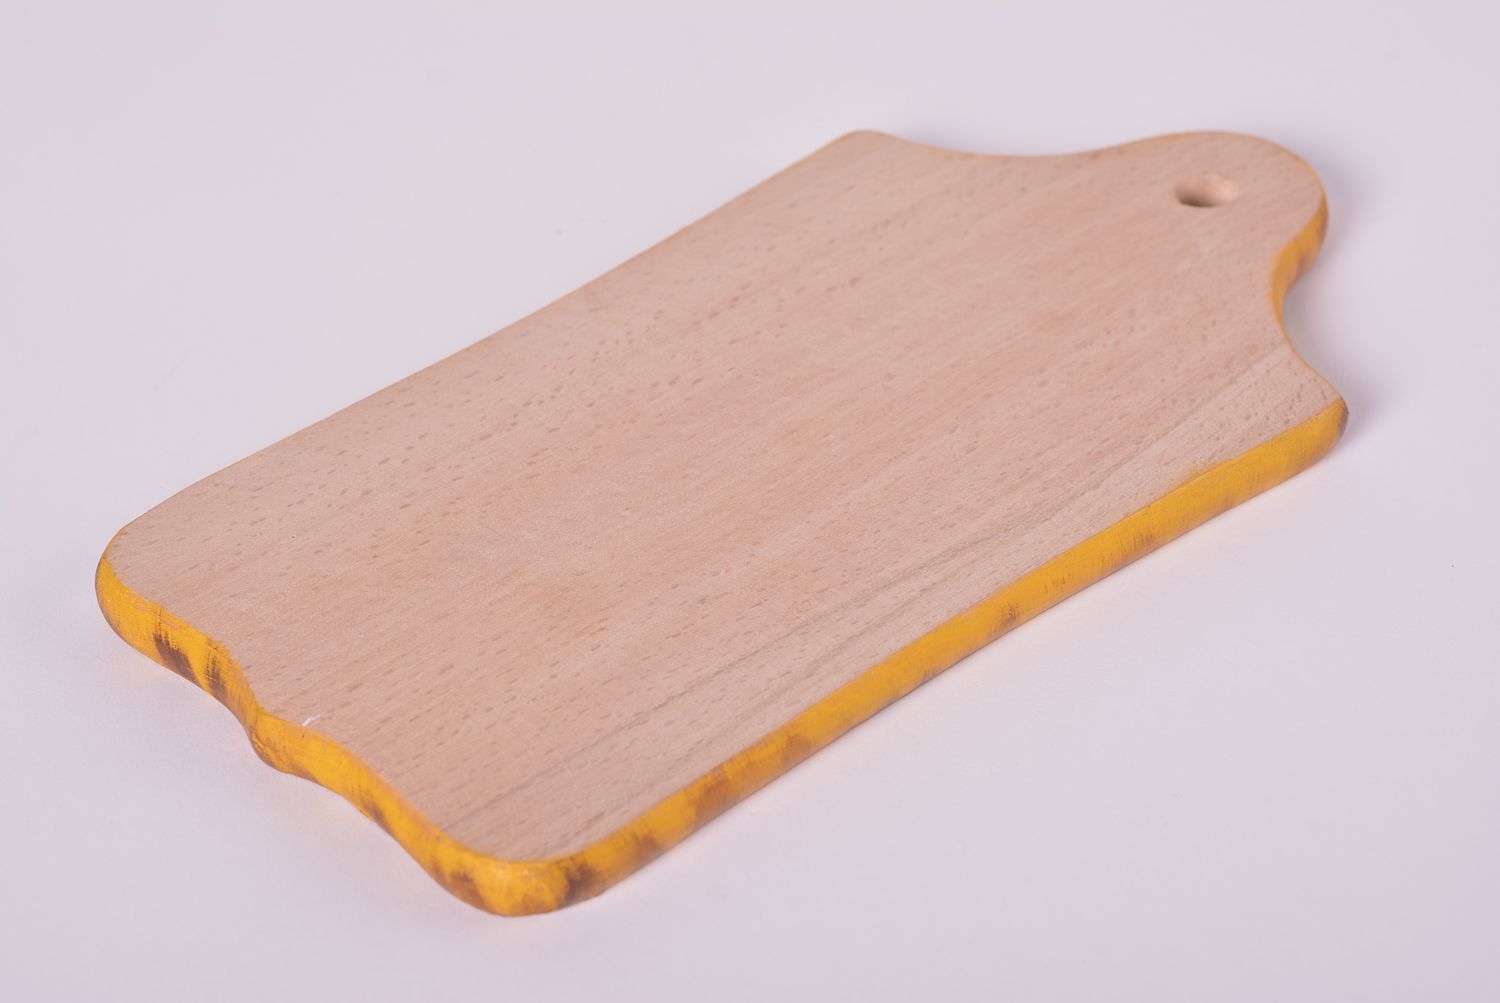 Unusual handmade chopping board wooden spatula kitchen supplies decoupage ideas photo 4